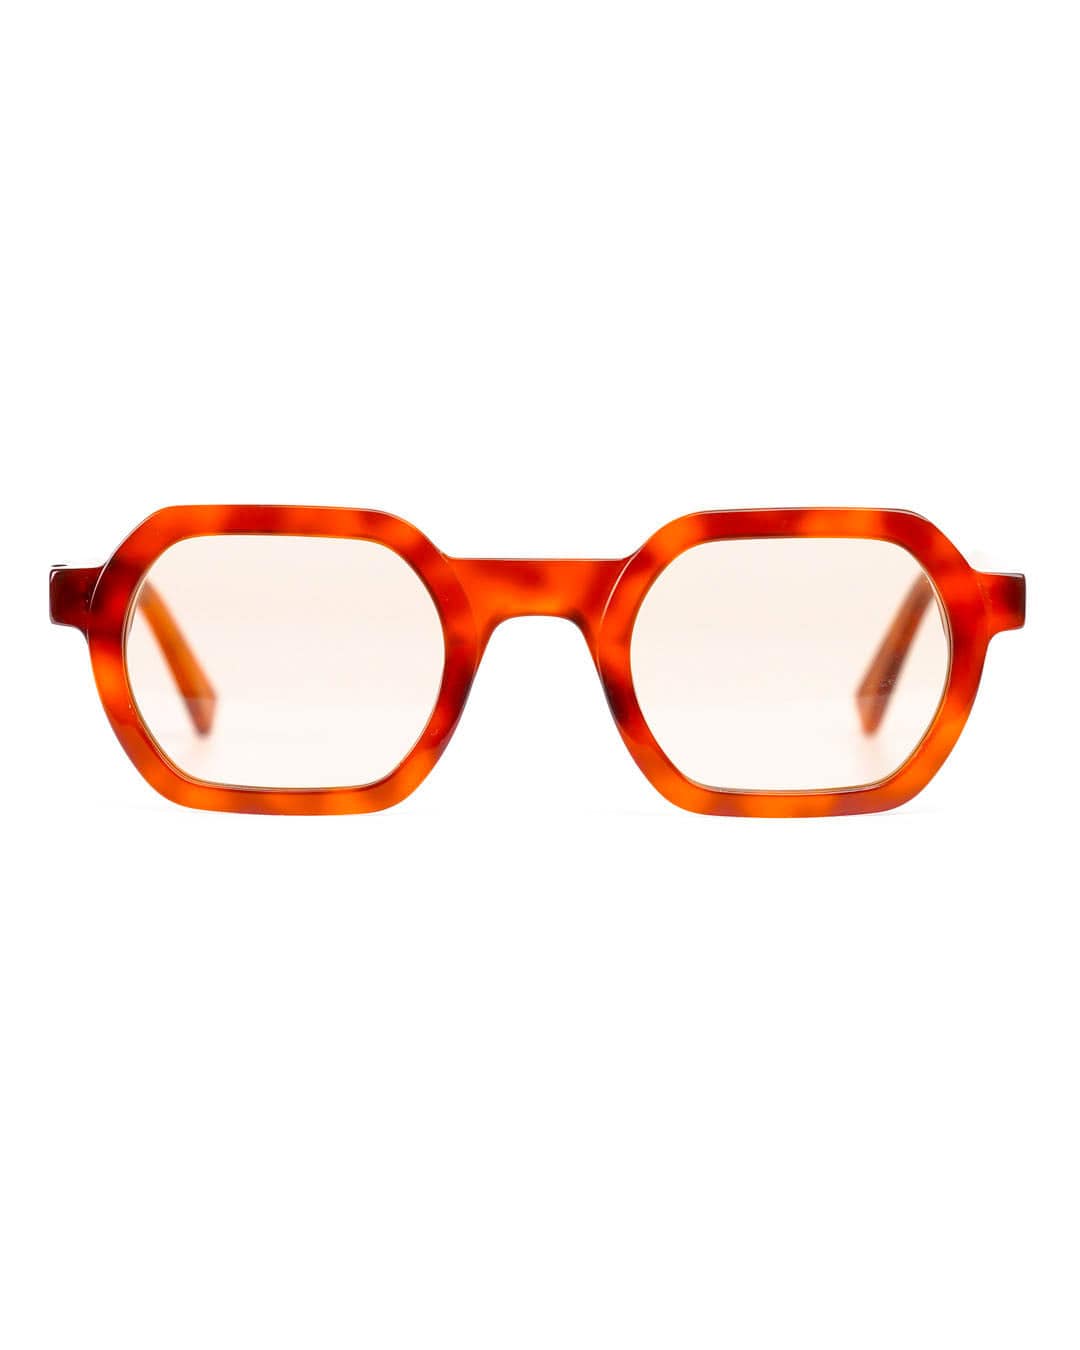 Cinnabar Orange-Brown Sunglasses: Contemporary Style Meets Timeless Elegance - LUNAR